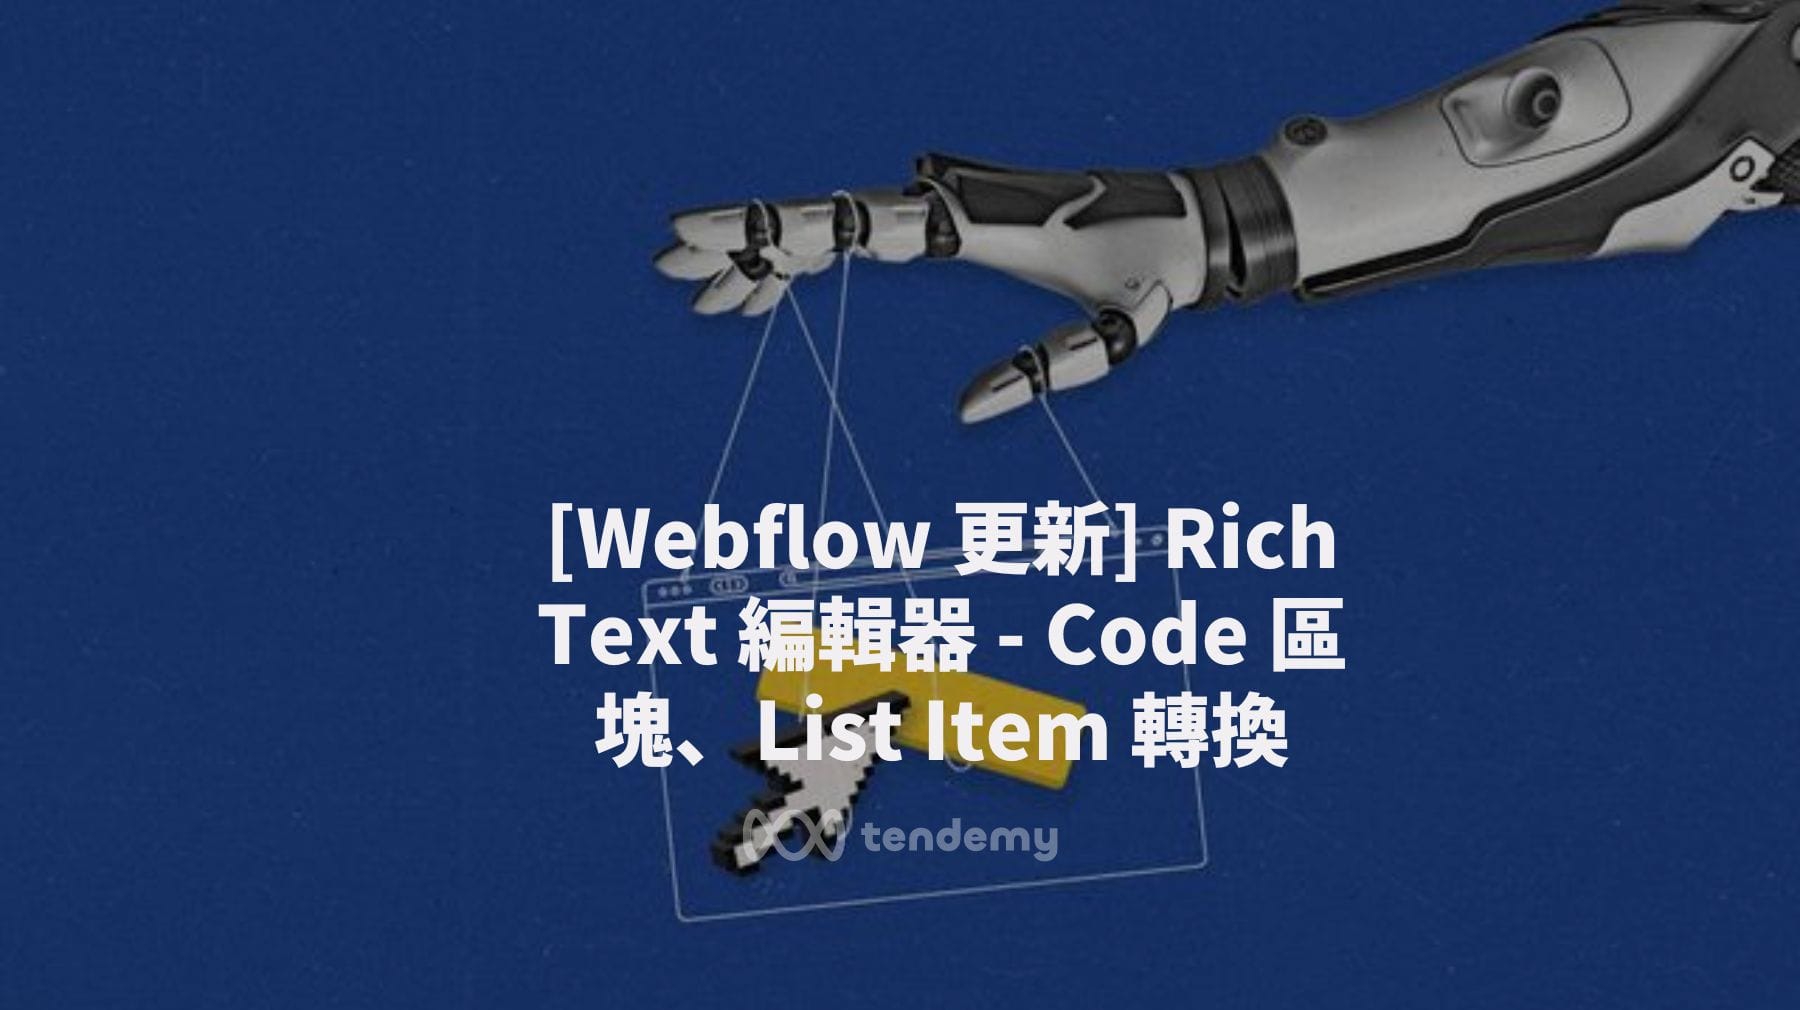 [Webflow 更新] Rich Text 編輯器 - Code 區塊、List Item 轉換